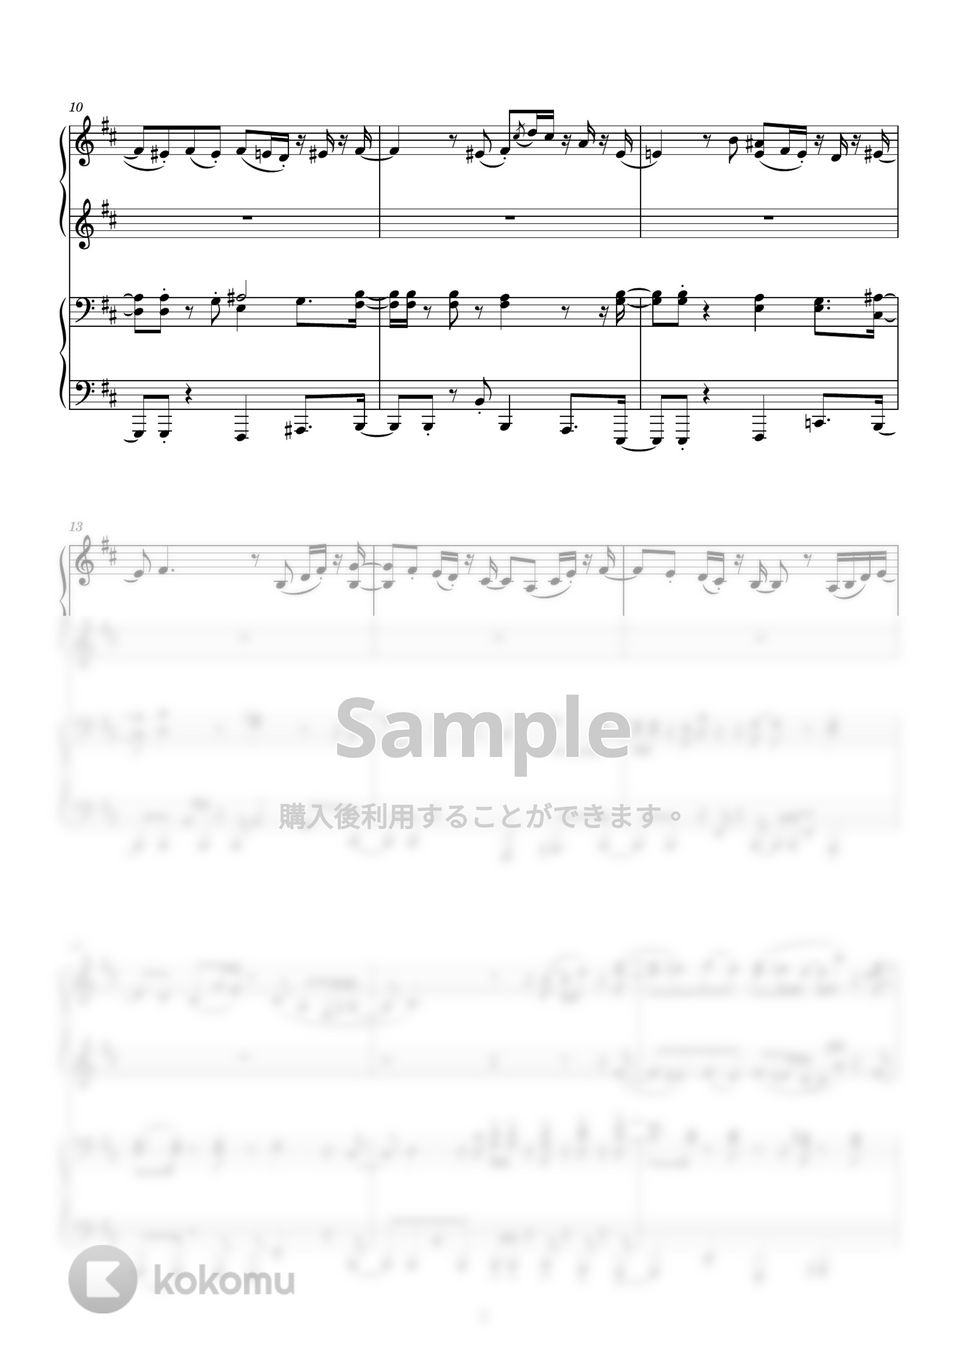 MAISONdes feat. 花譜, ツミキ - トウキョウ・シャンディ・ランデヴ (ピアノ連弾) by 蒼鷲